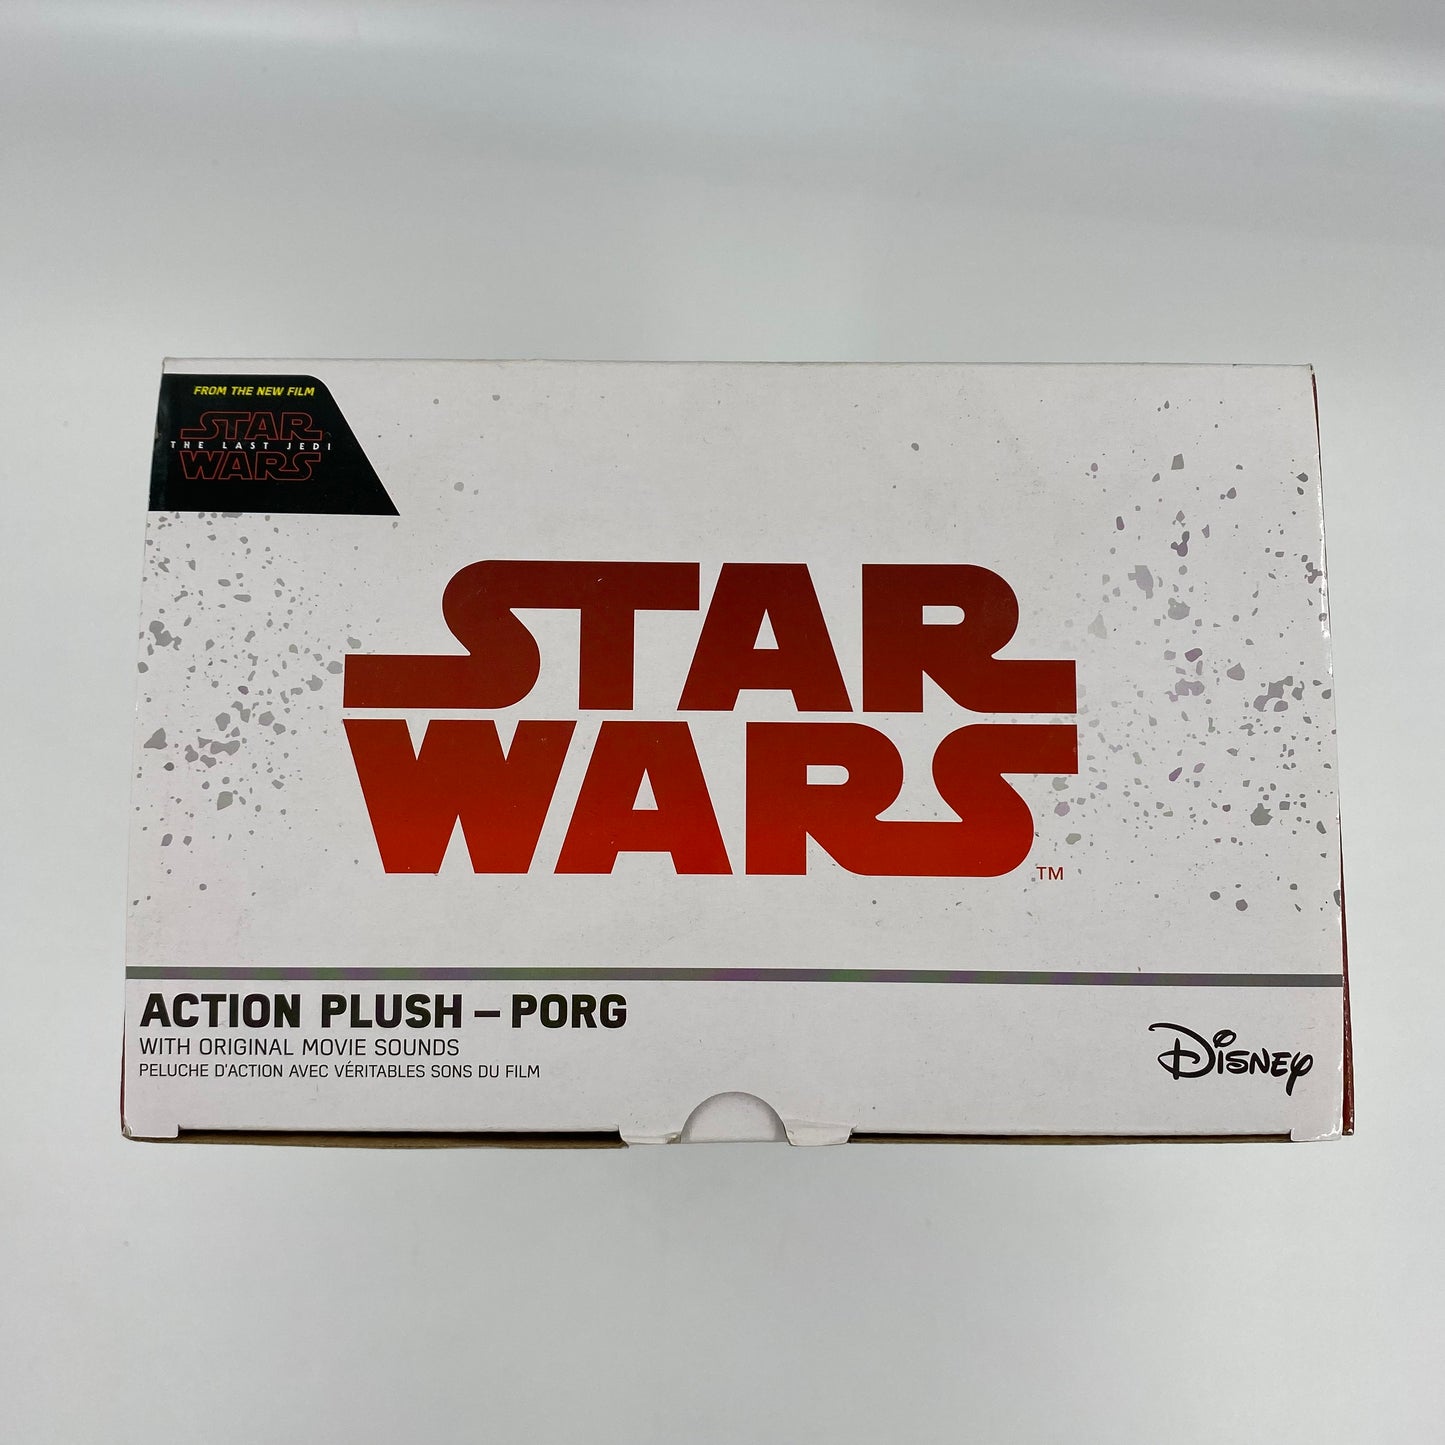 Star Wars The Last Jedi Action Plush Porg boxed (2017) Hasbro